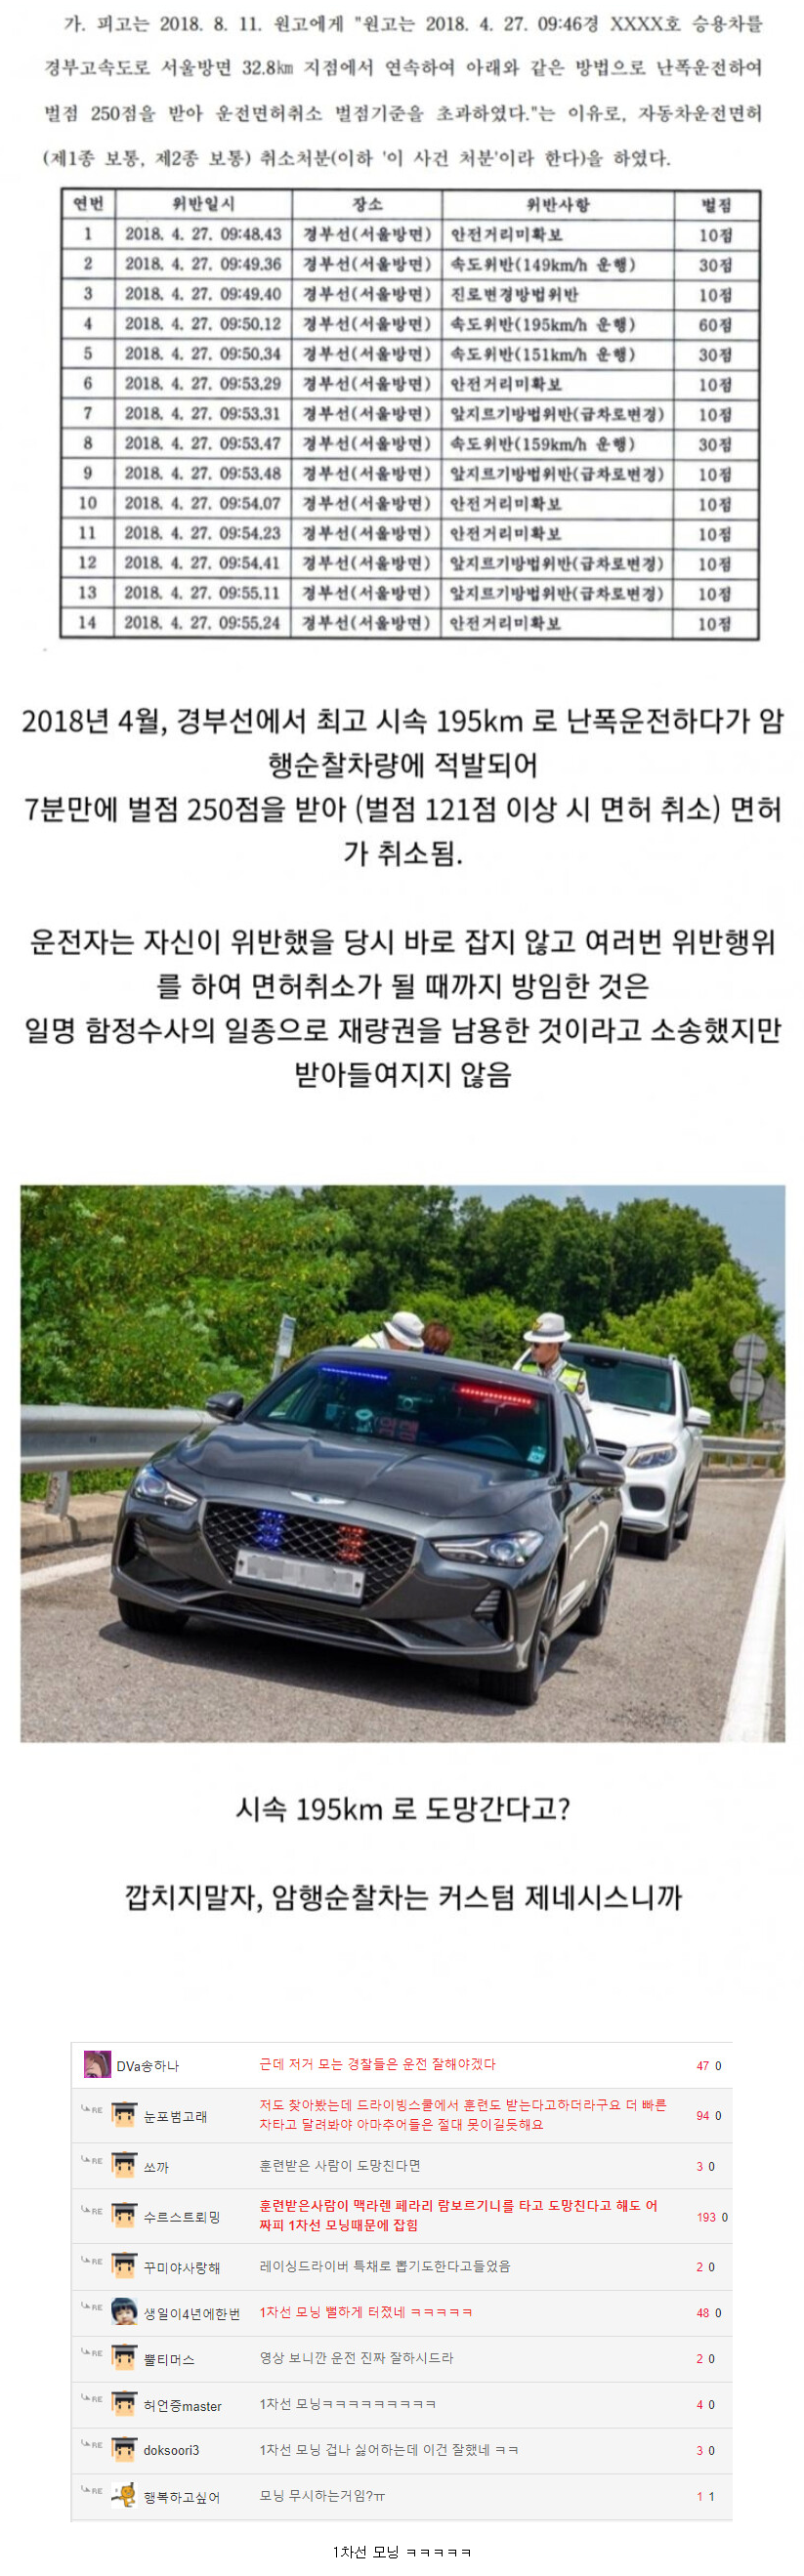 Screenshot 2022-10-21 at 00-05-56 한국에서 과속하는 사람이 경찰에게서 도망 못가는 이유.JPG 유머 게시판 루리웹.png